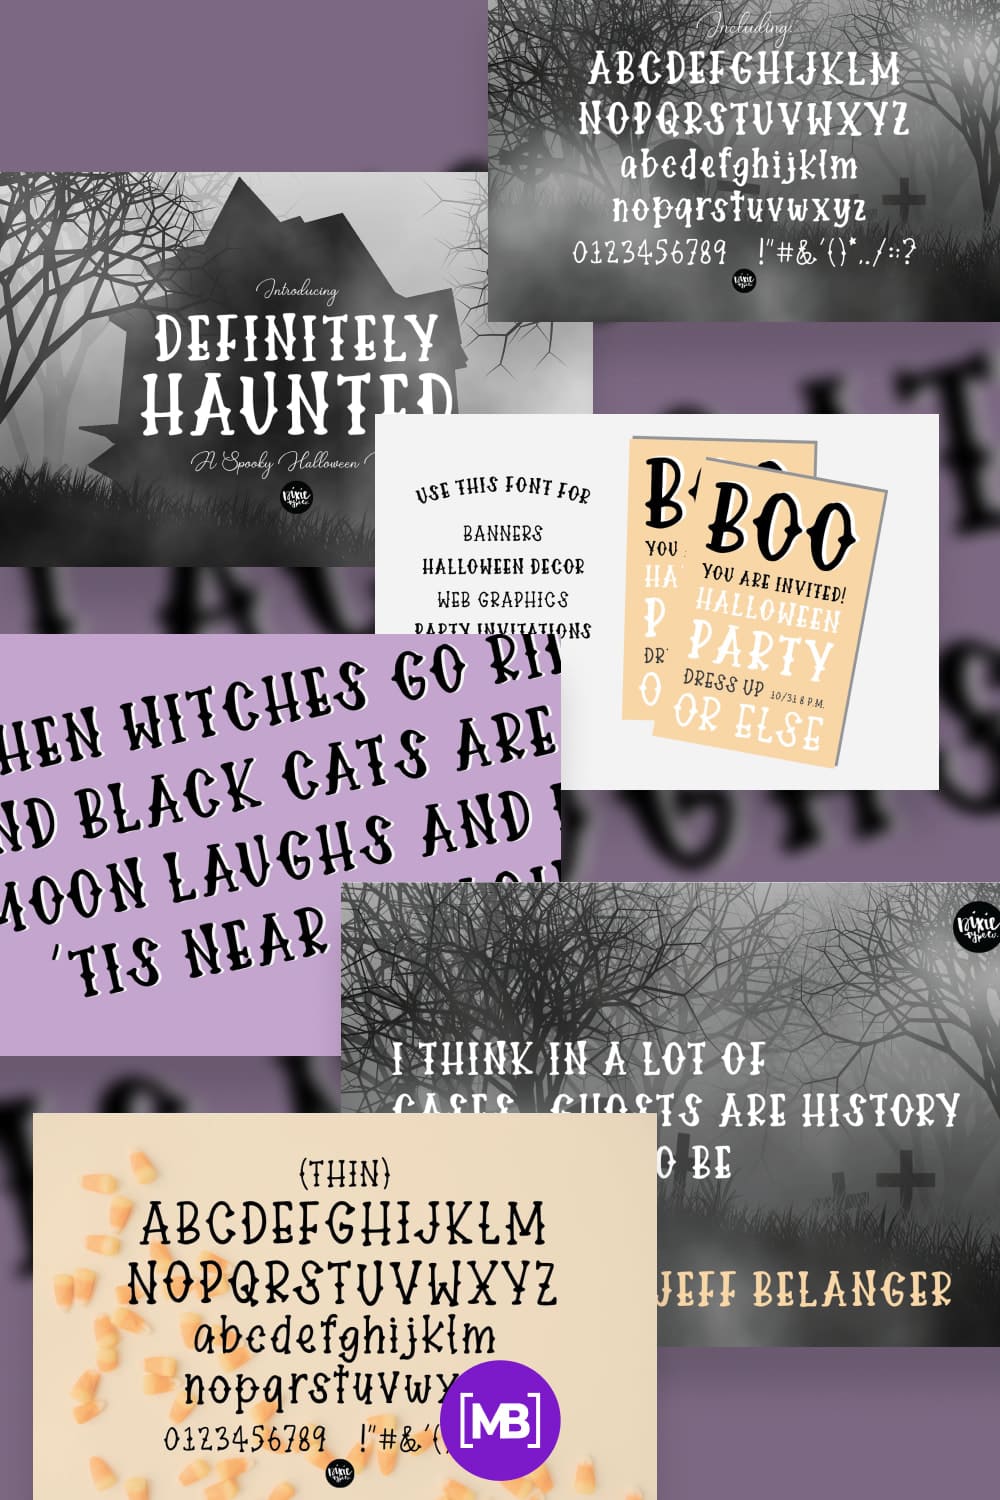 49 DEFINITELY HAUNTED A Spooky Halloween Font